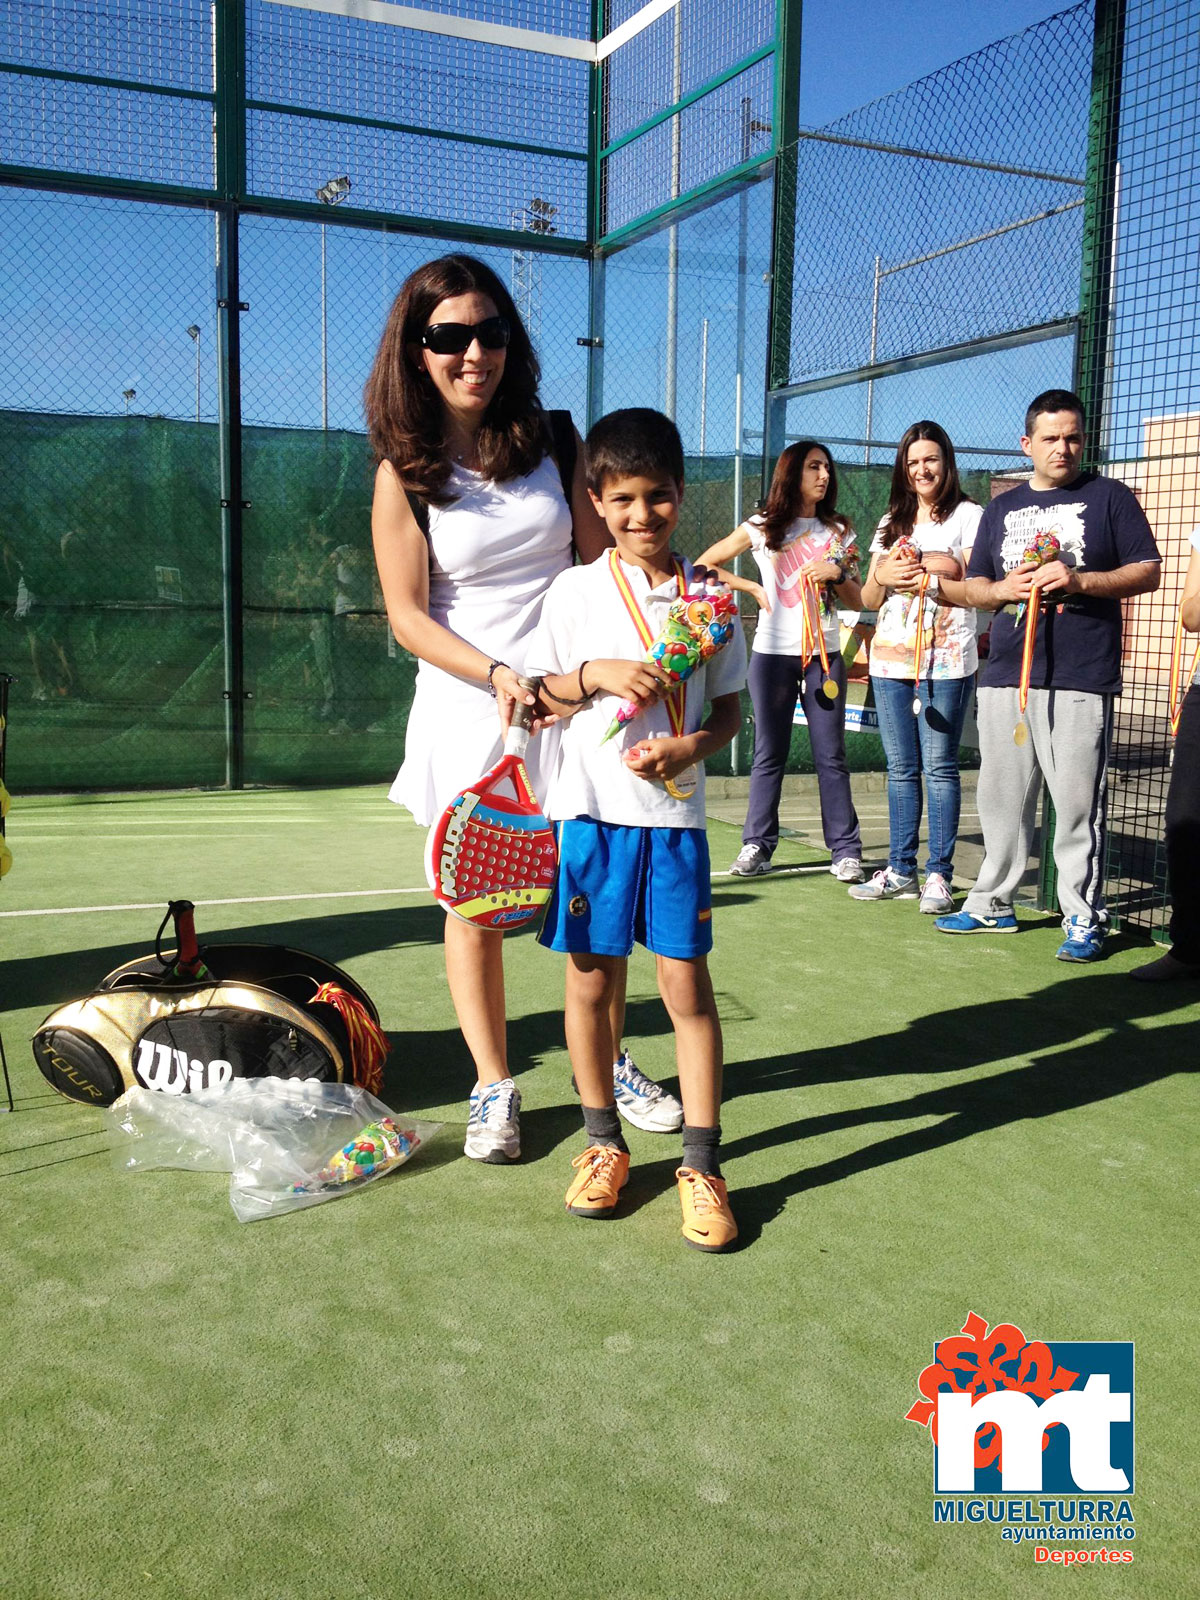 Celebrada la jornada de pádel infantil de la Escuela Deportiva de Miguelturra